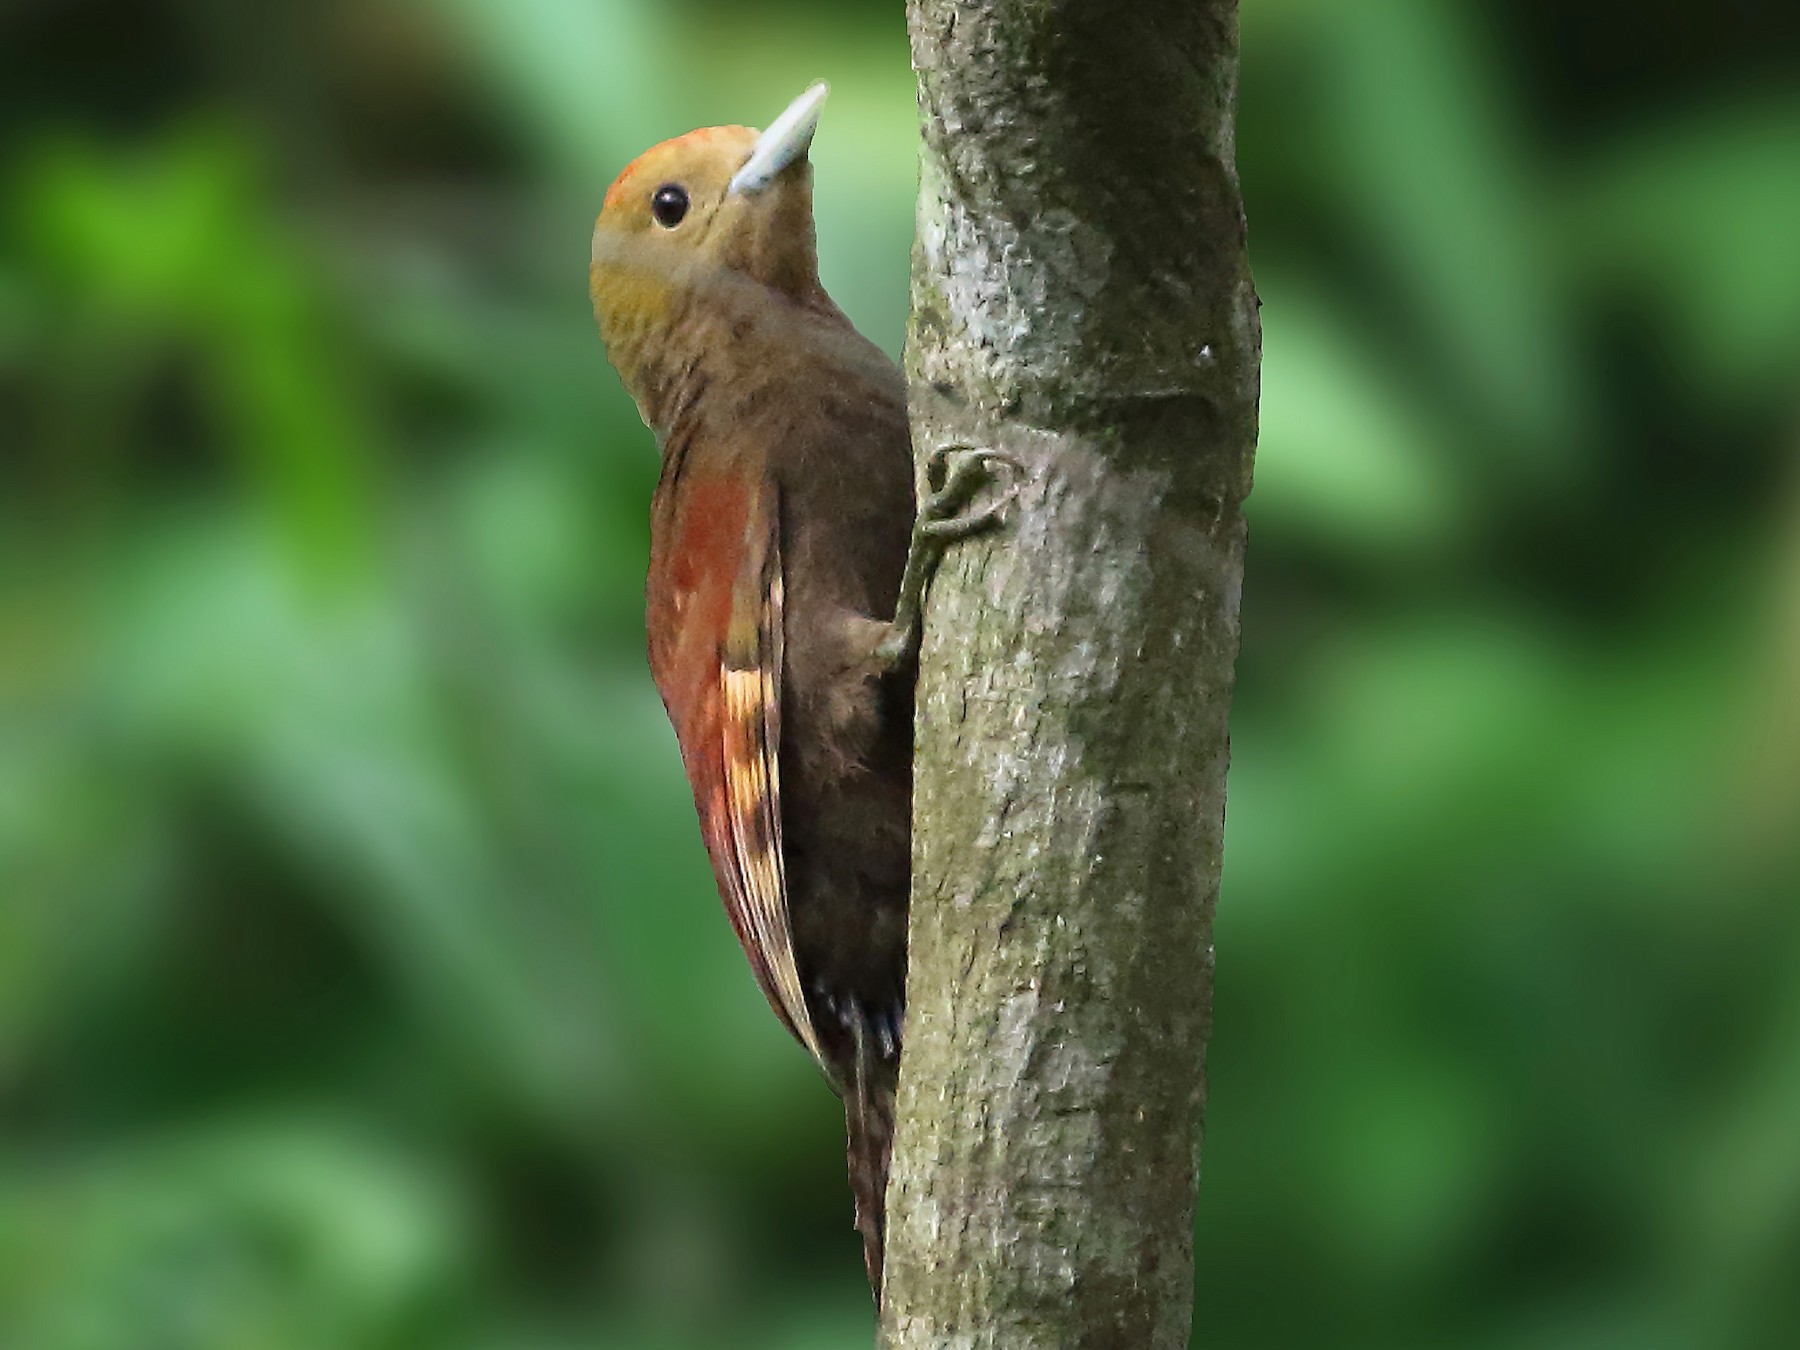 Pale-headed Woodpecker - Amitava Ganguly